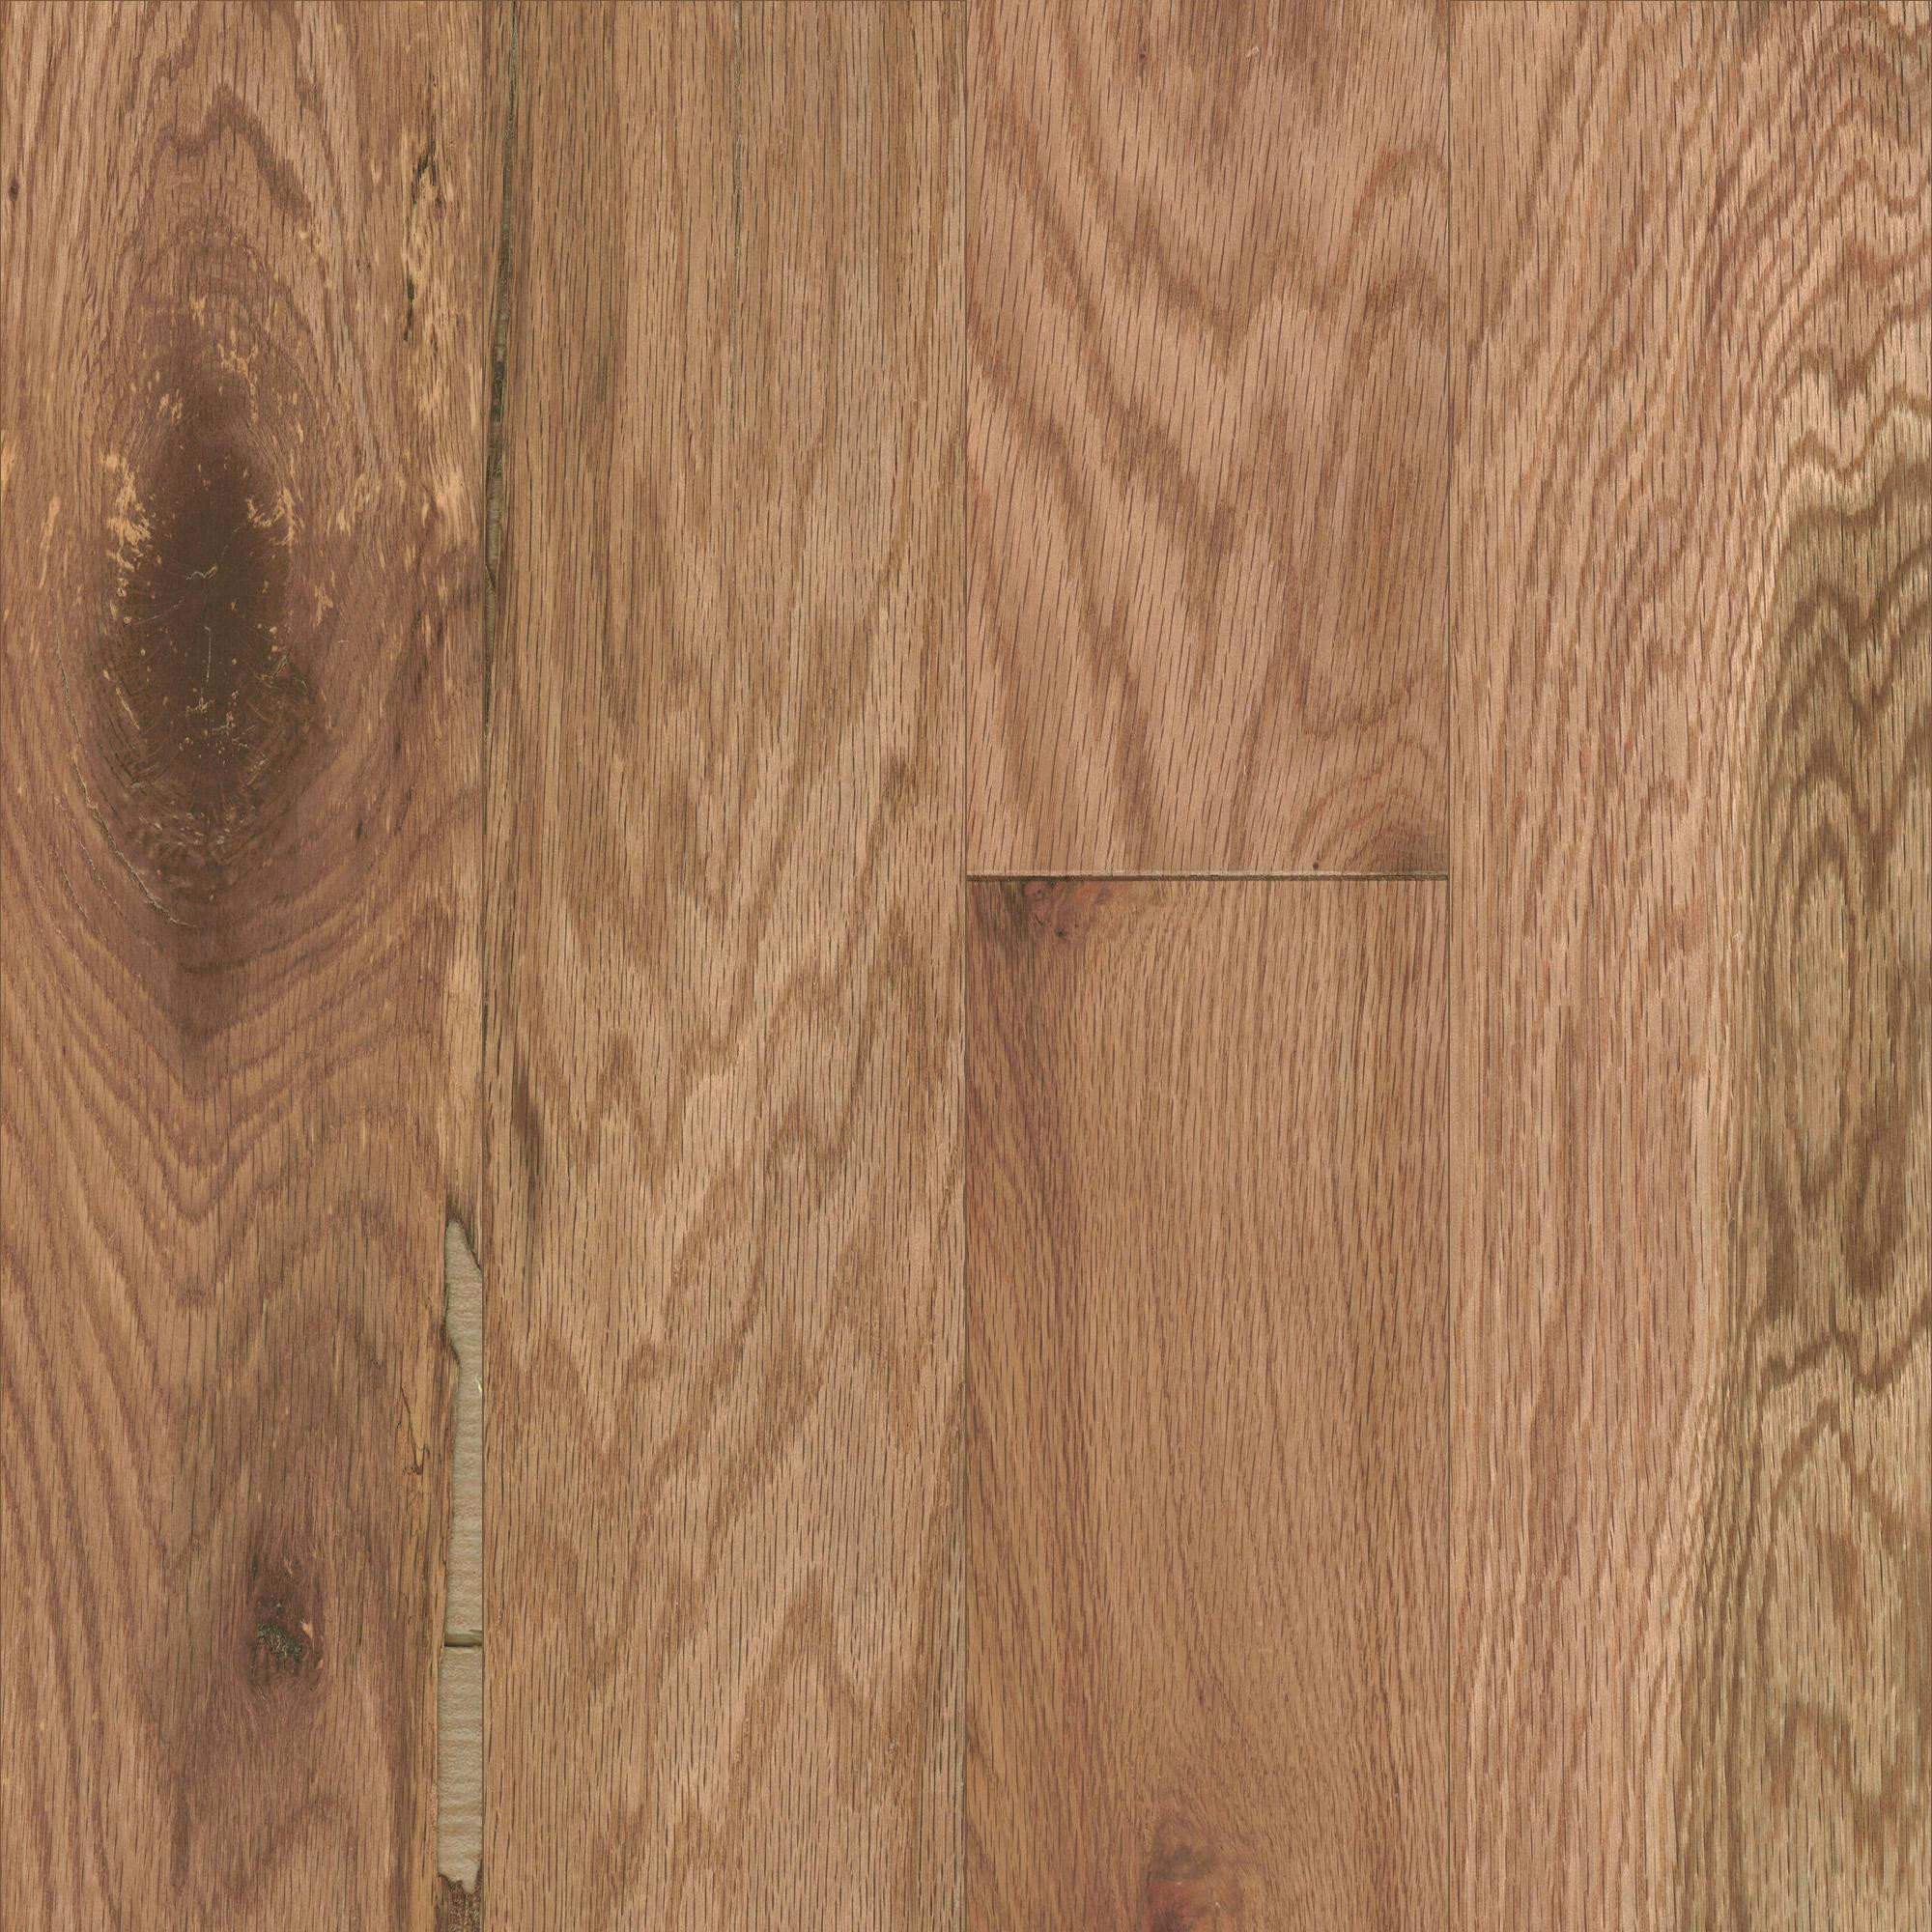 floating hardwood floor padding of mullican ridgecrest red oak natural 1 2 thick 5 wide engineered throughout mullican ridgecrest red oak natural 1 2 thick 5 wide engineered hardwood flooring